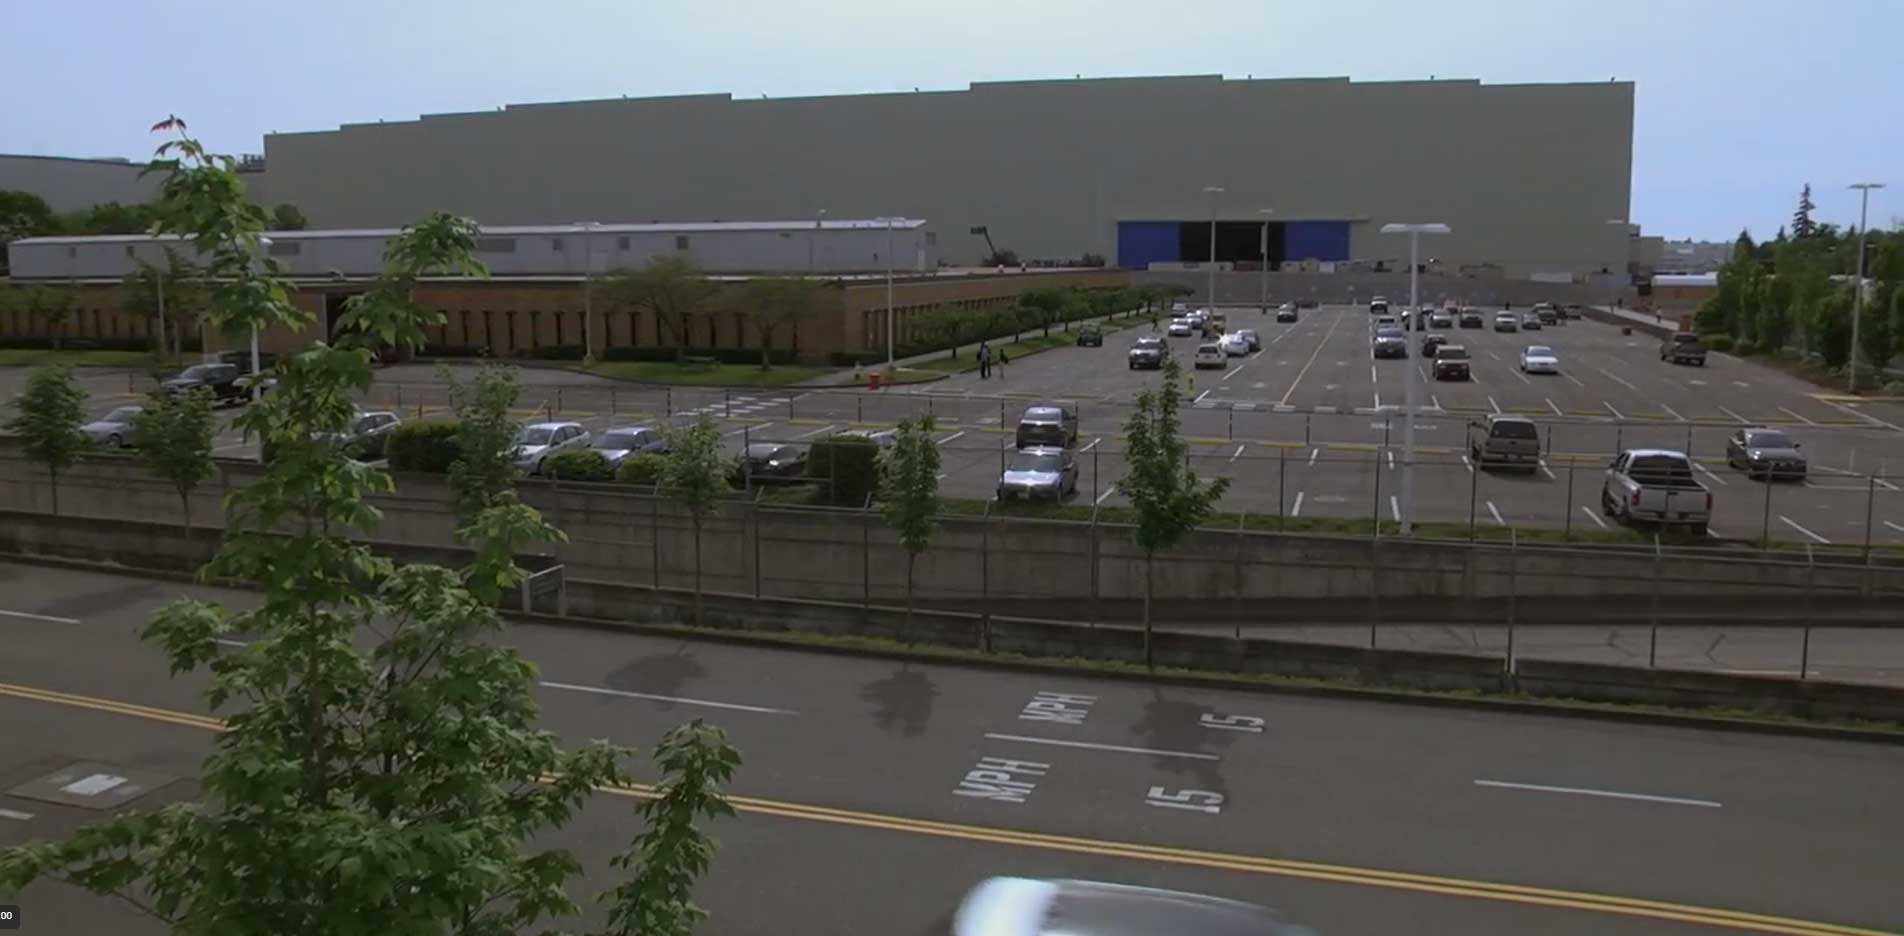 Boeing - Composite Wing Center, in Everett, Washington